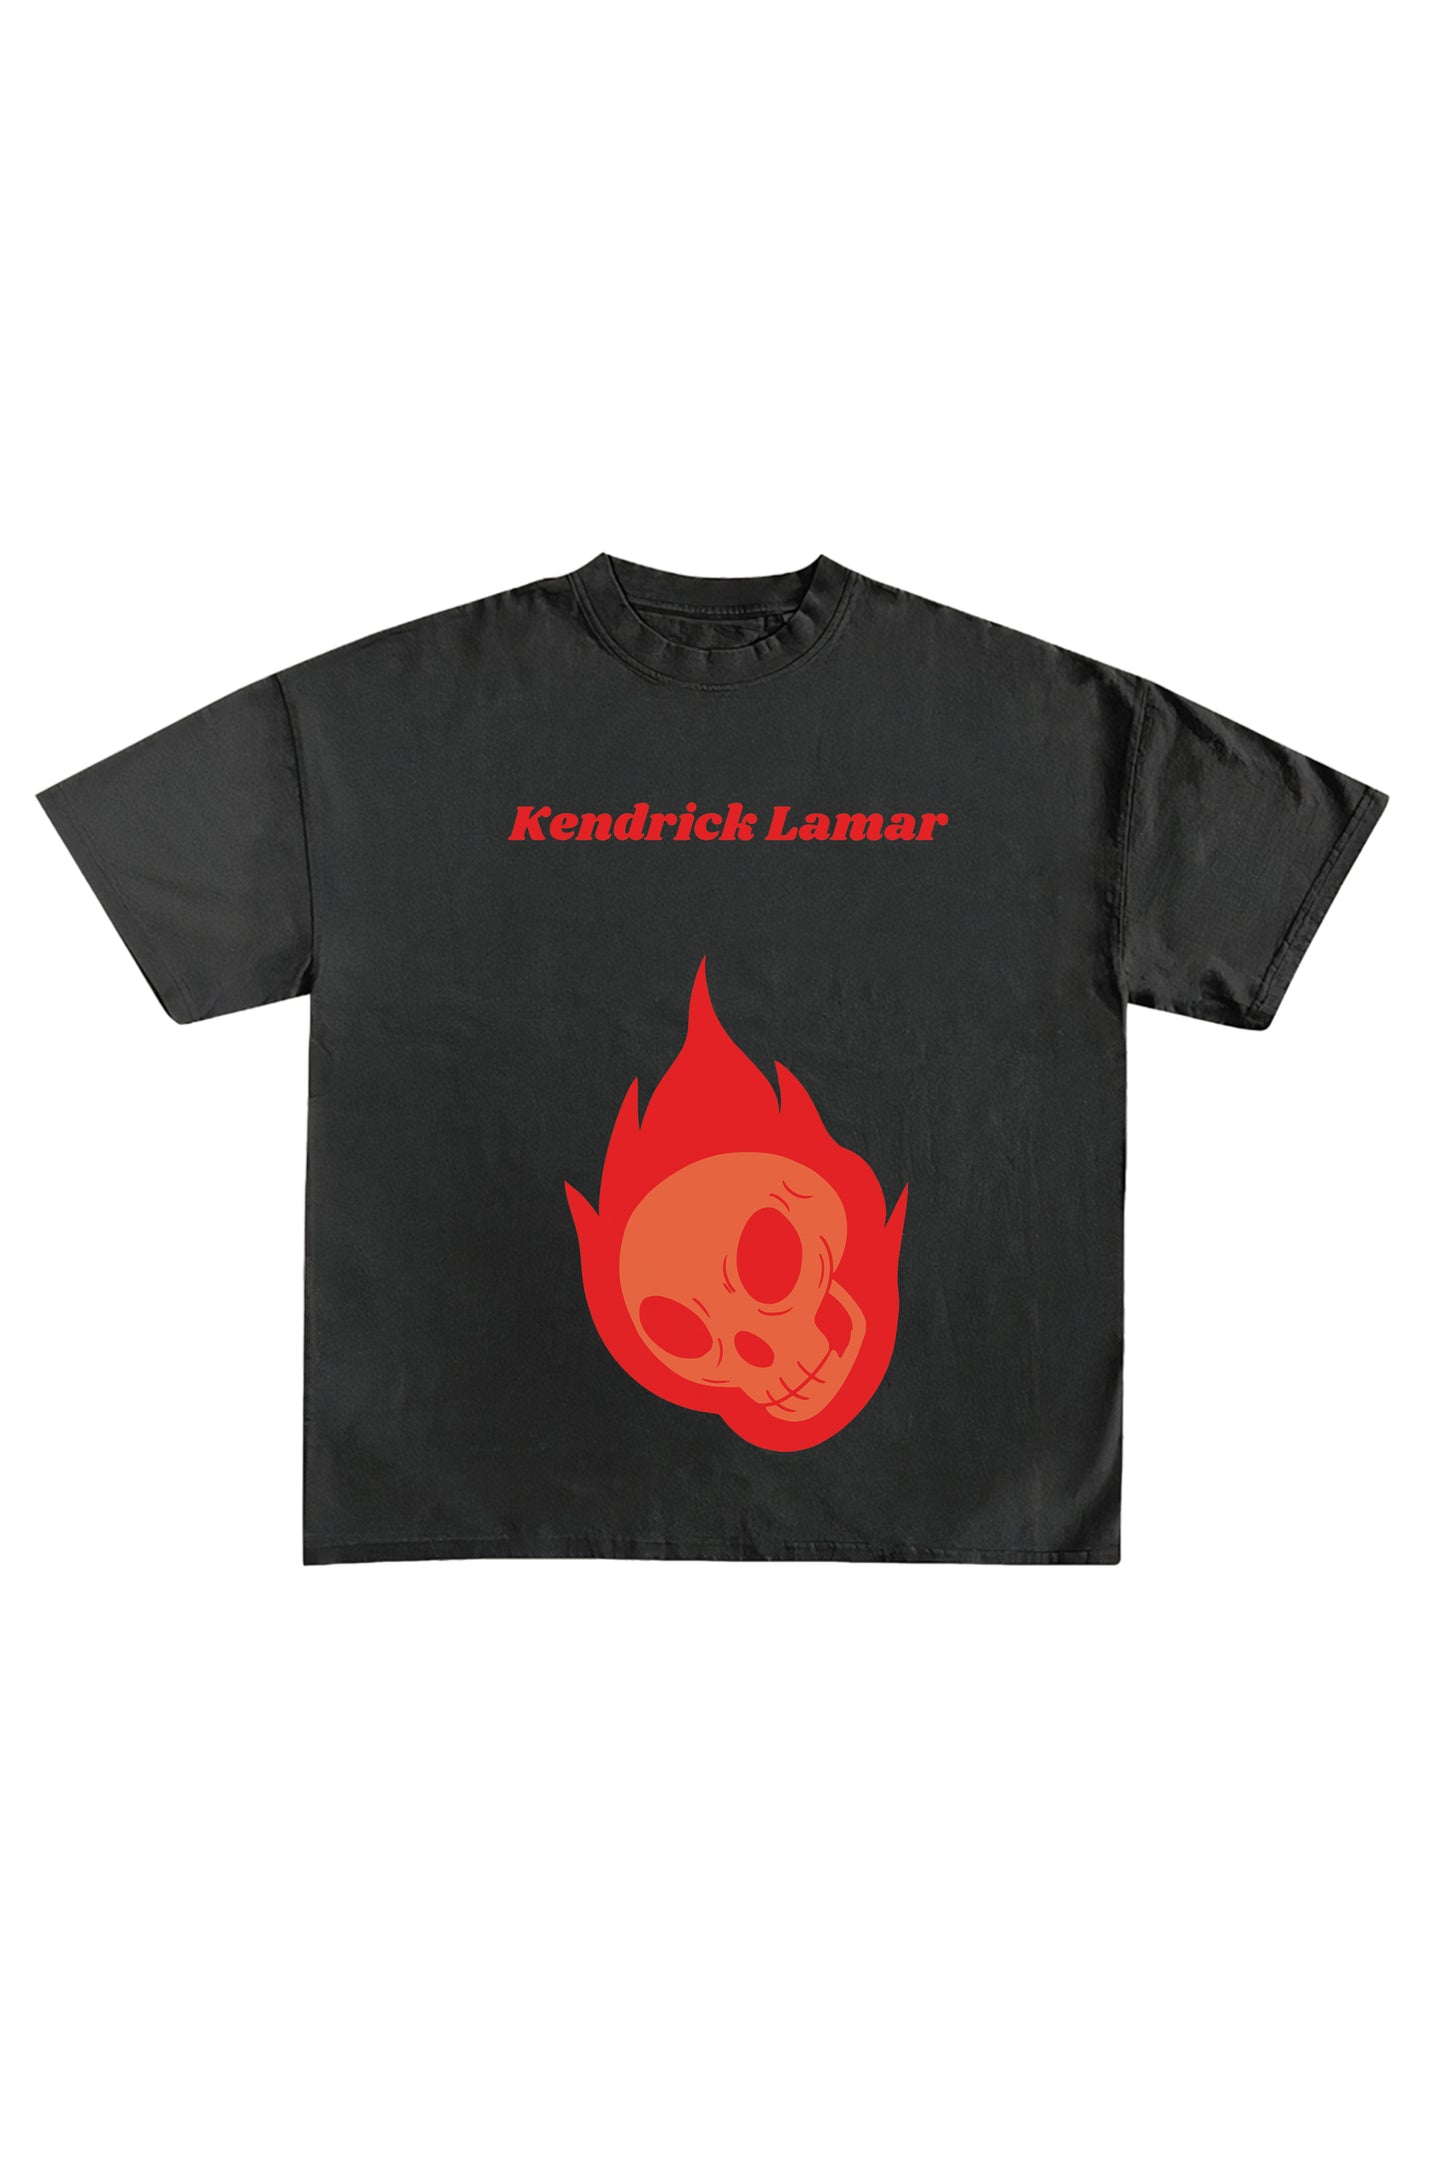 Kendrick Lamar Designed Oversized T-shirt